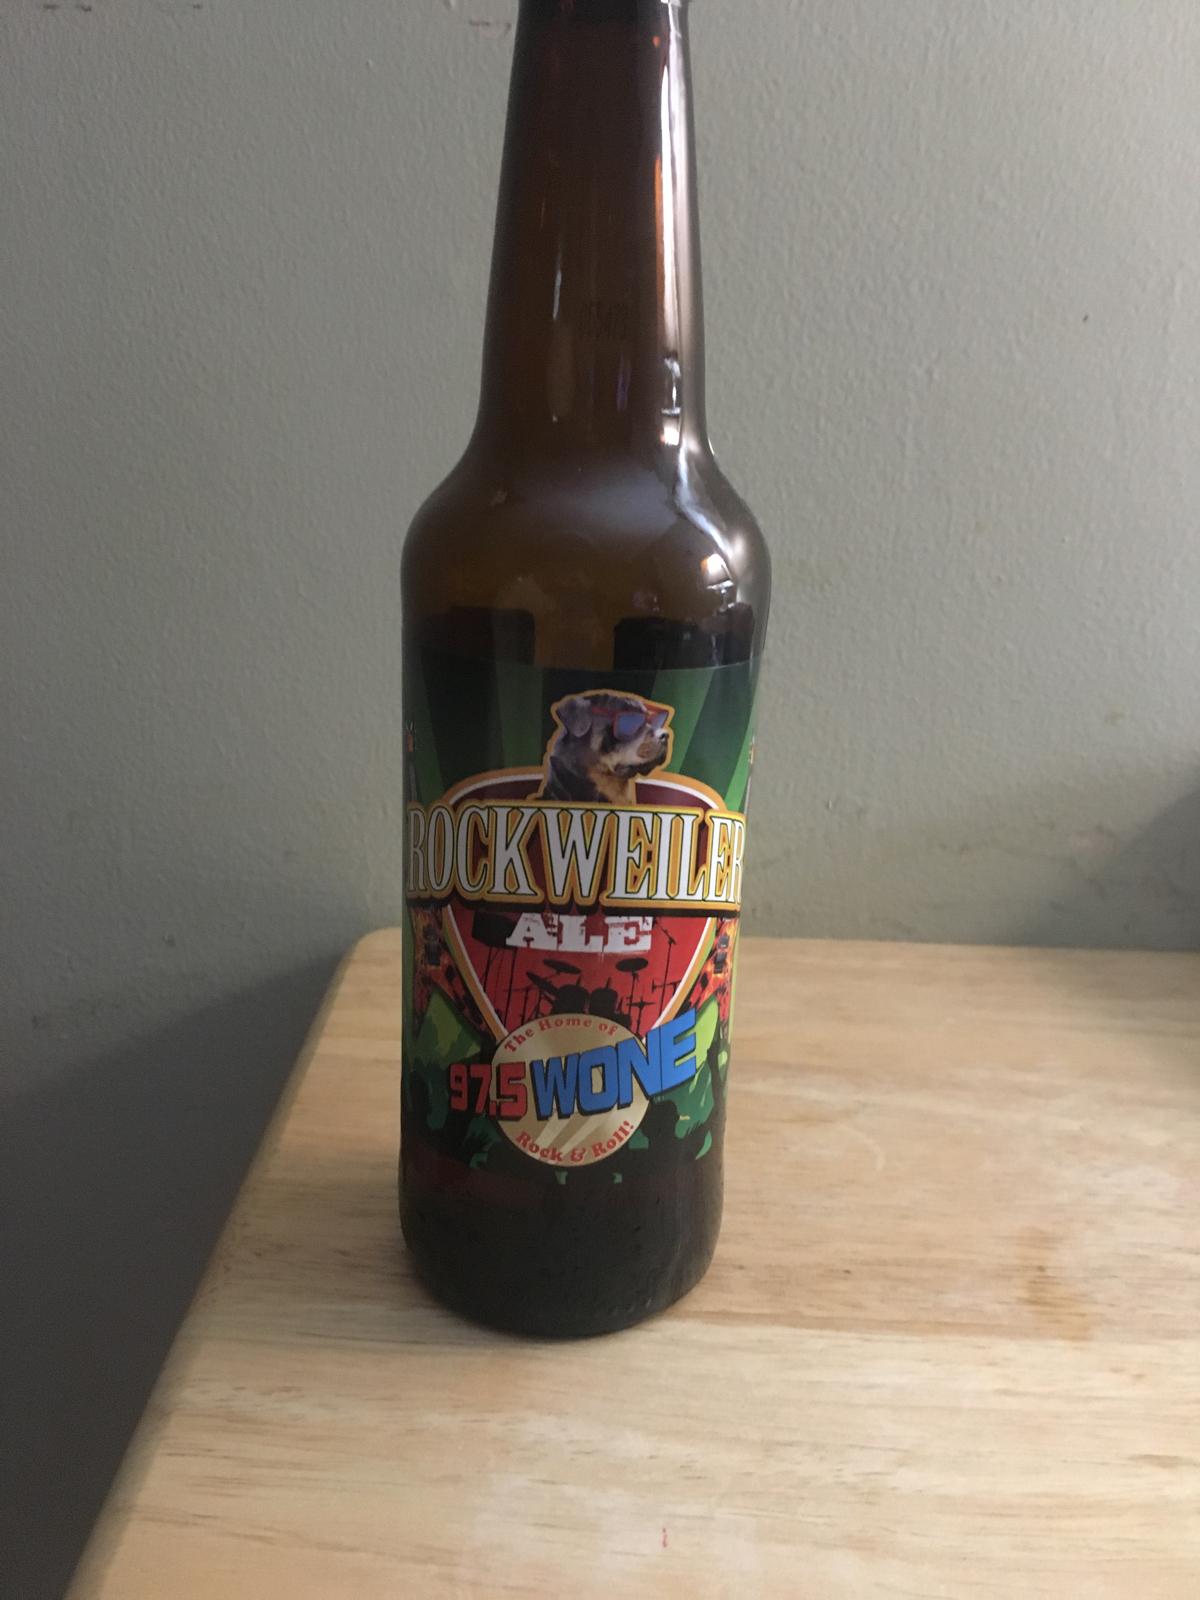 Rockweiler Ale